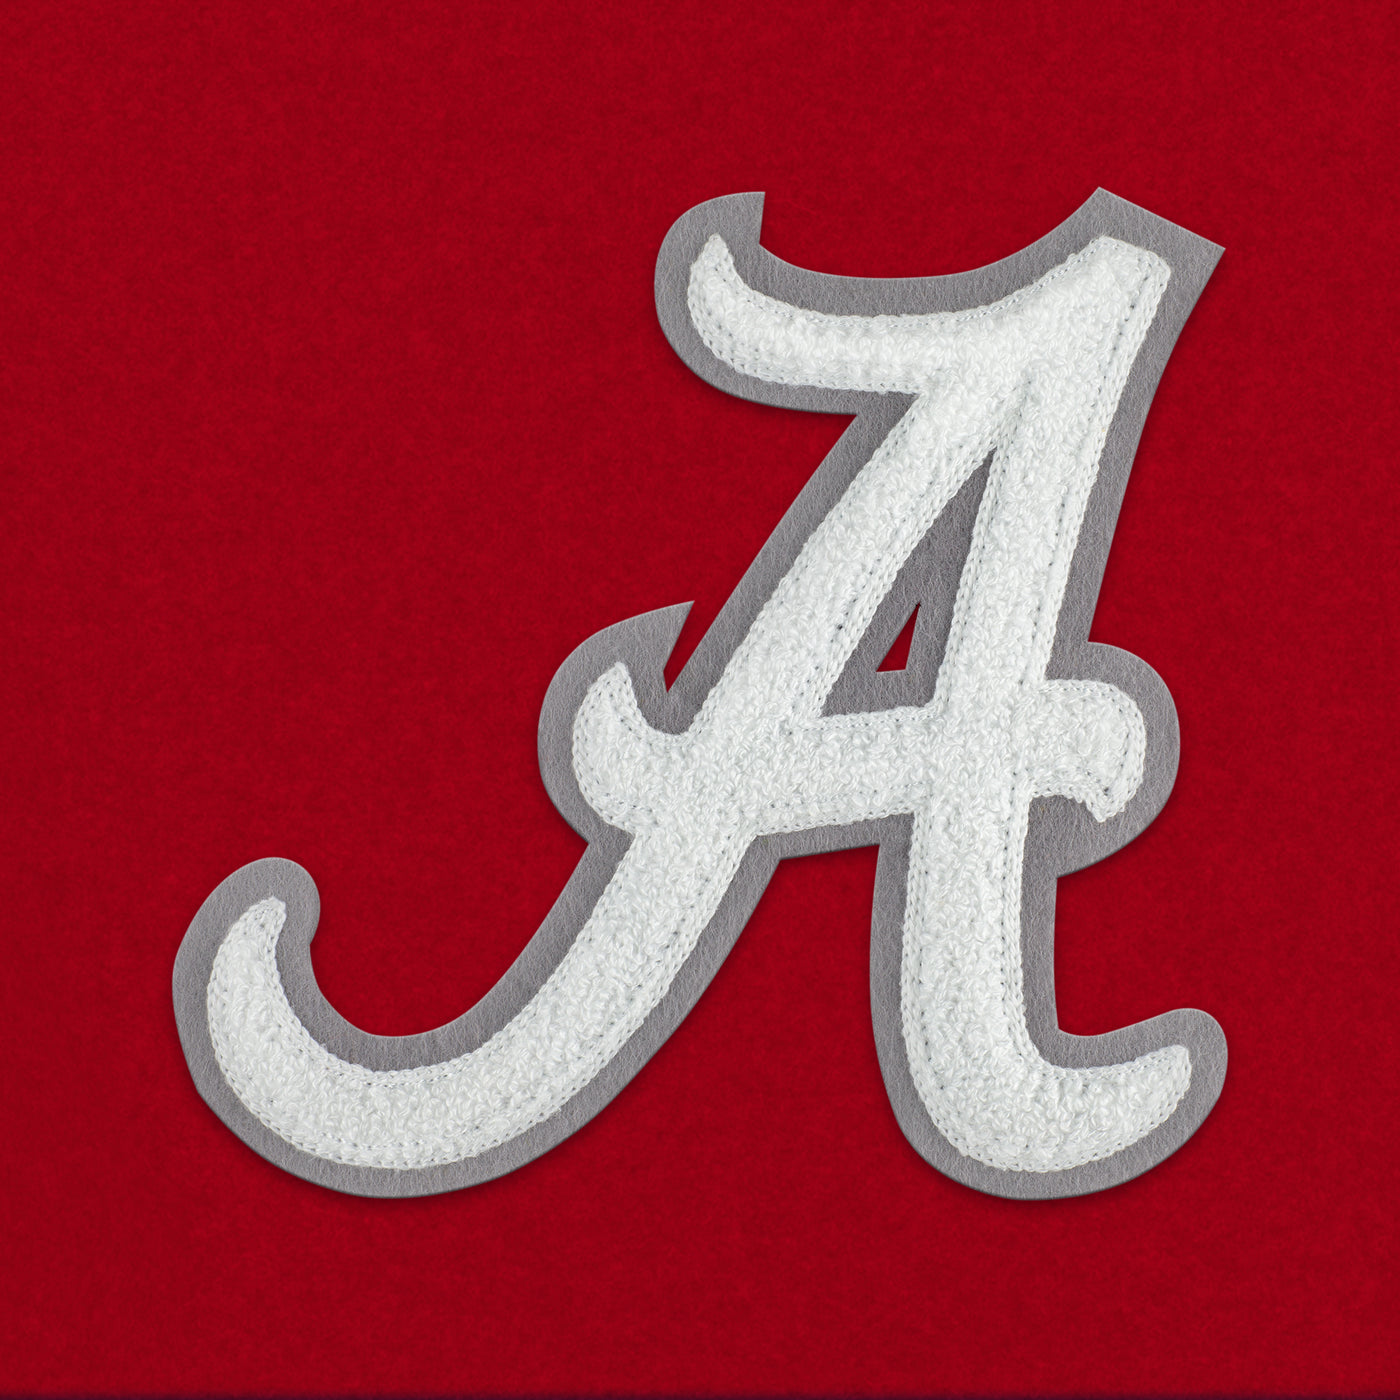 Alabama Crimson Tide "A" Weekender Duffle Bag